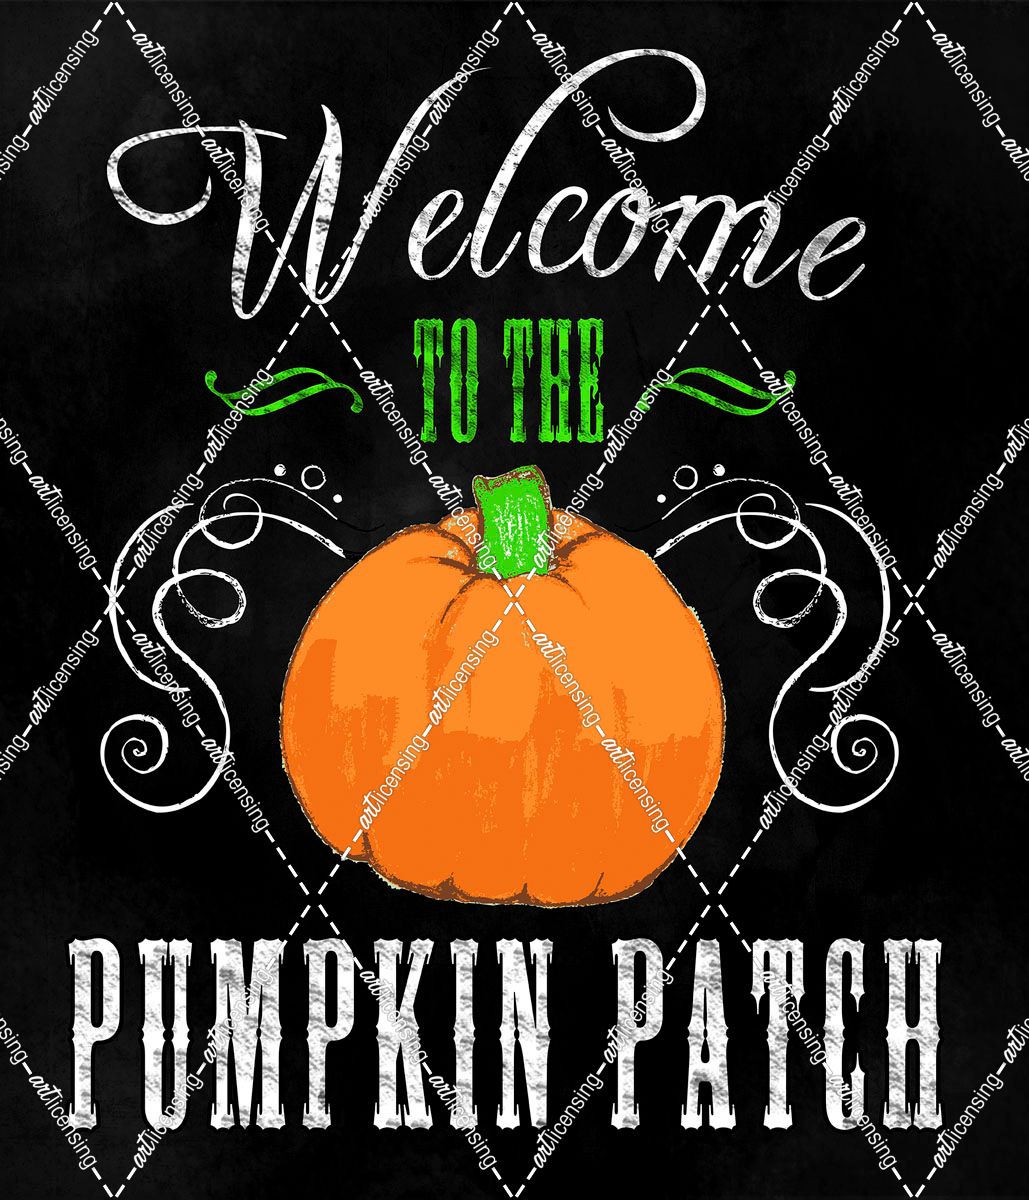 Welcome Pumpkin Patch